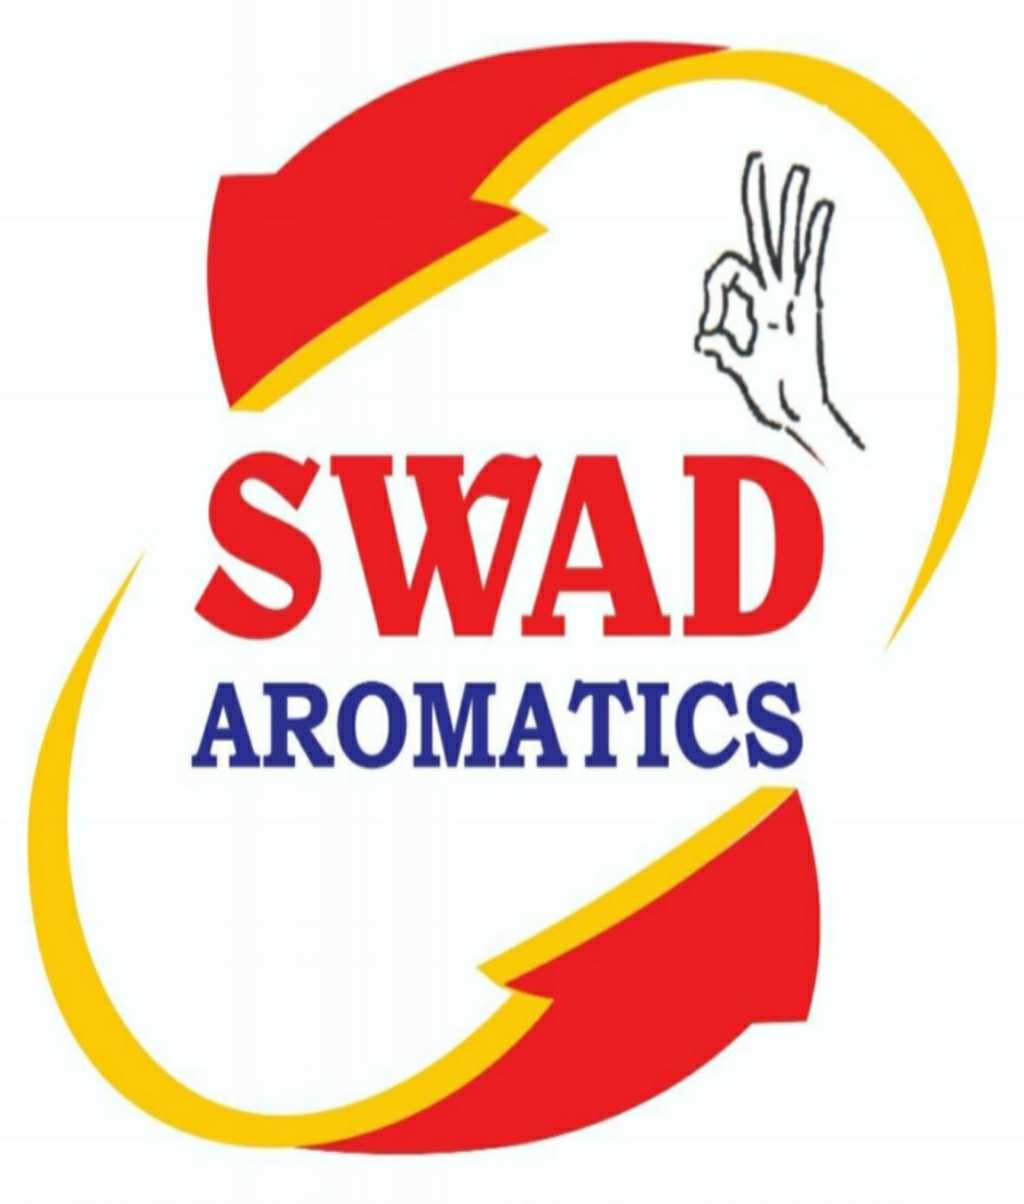 SWAD AROMATICS